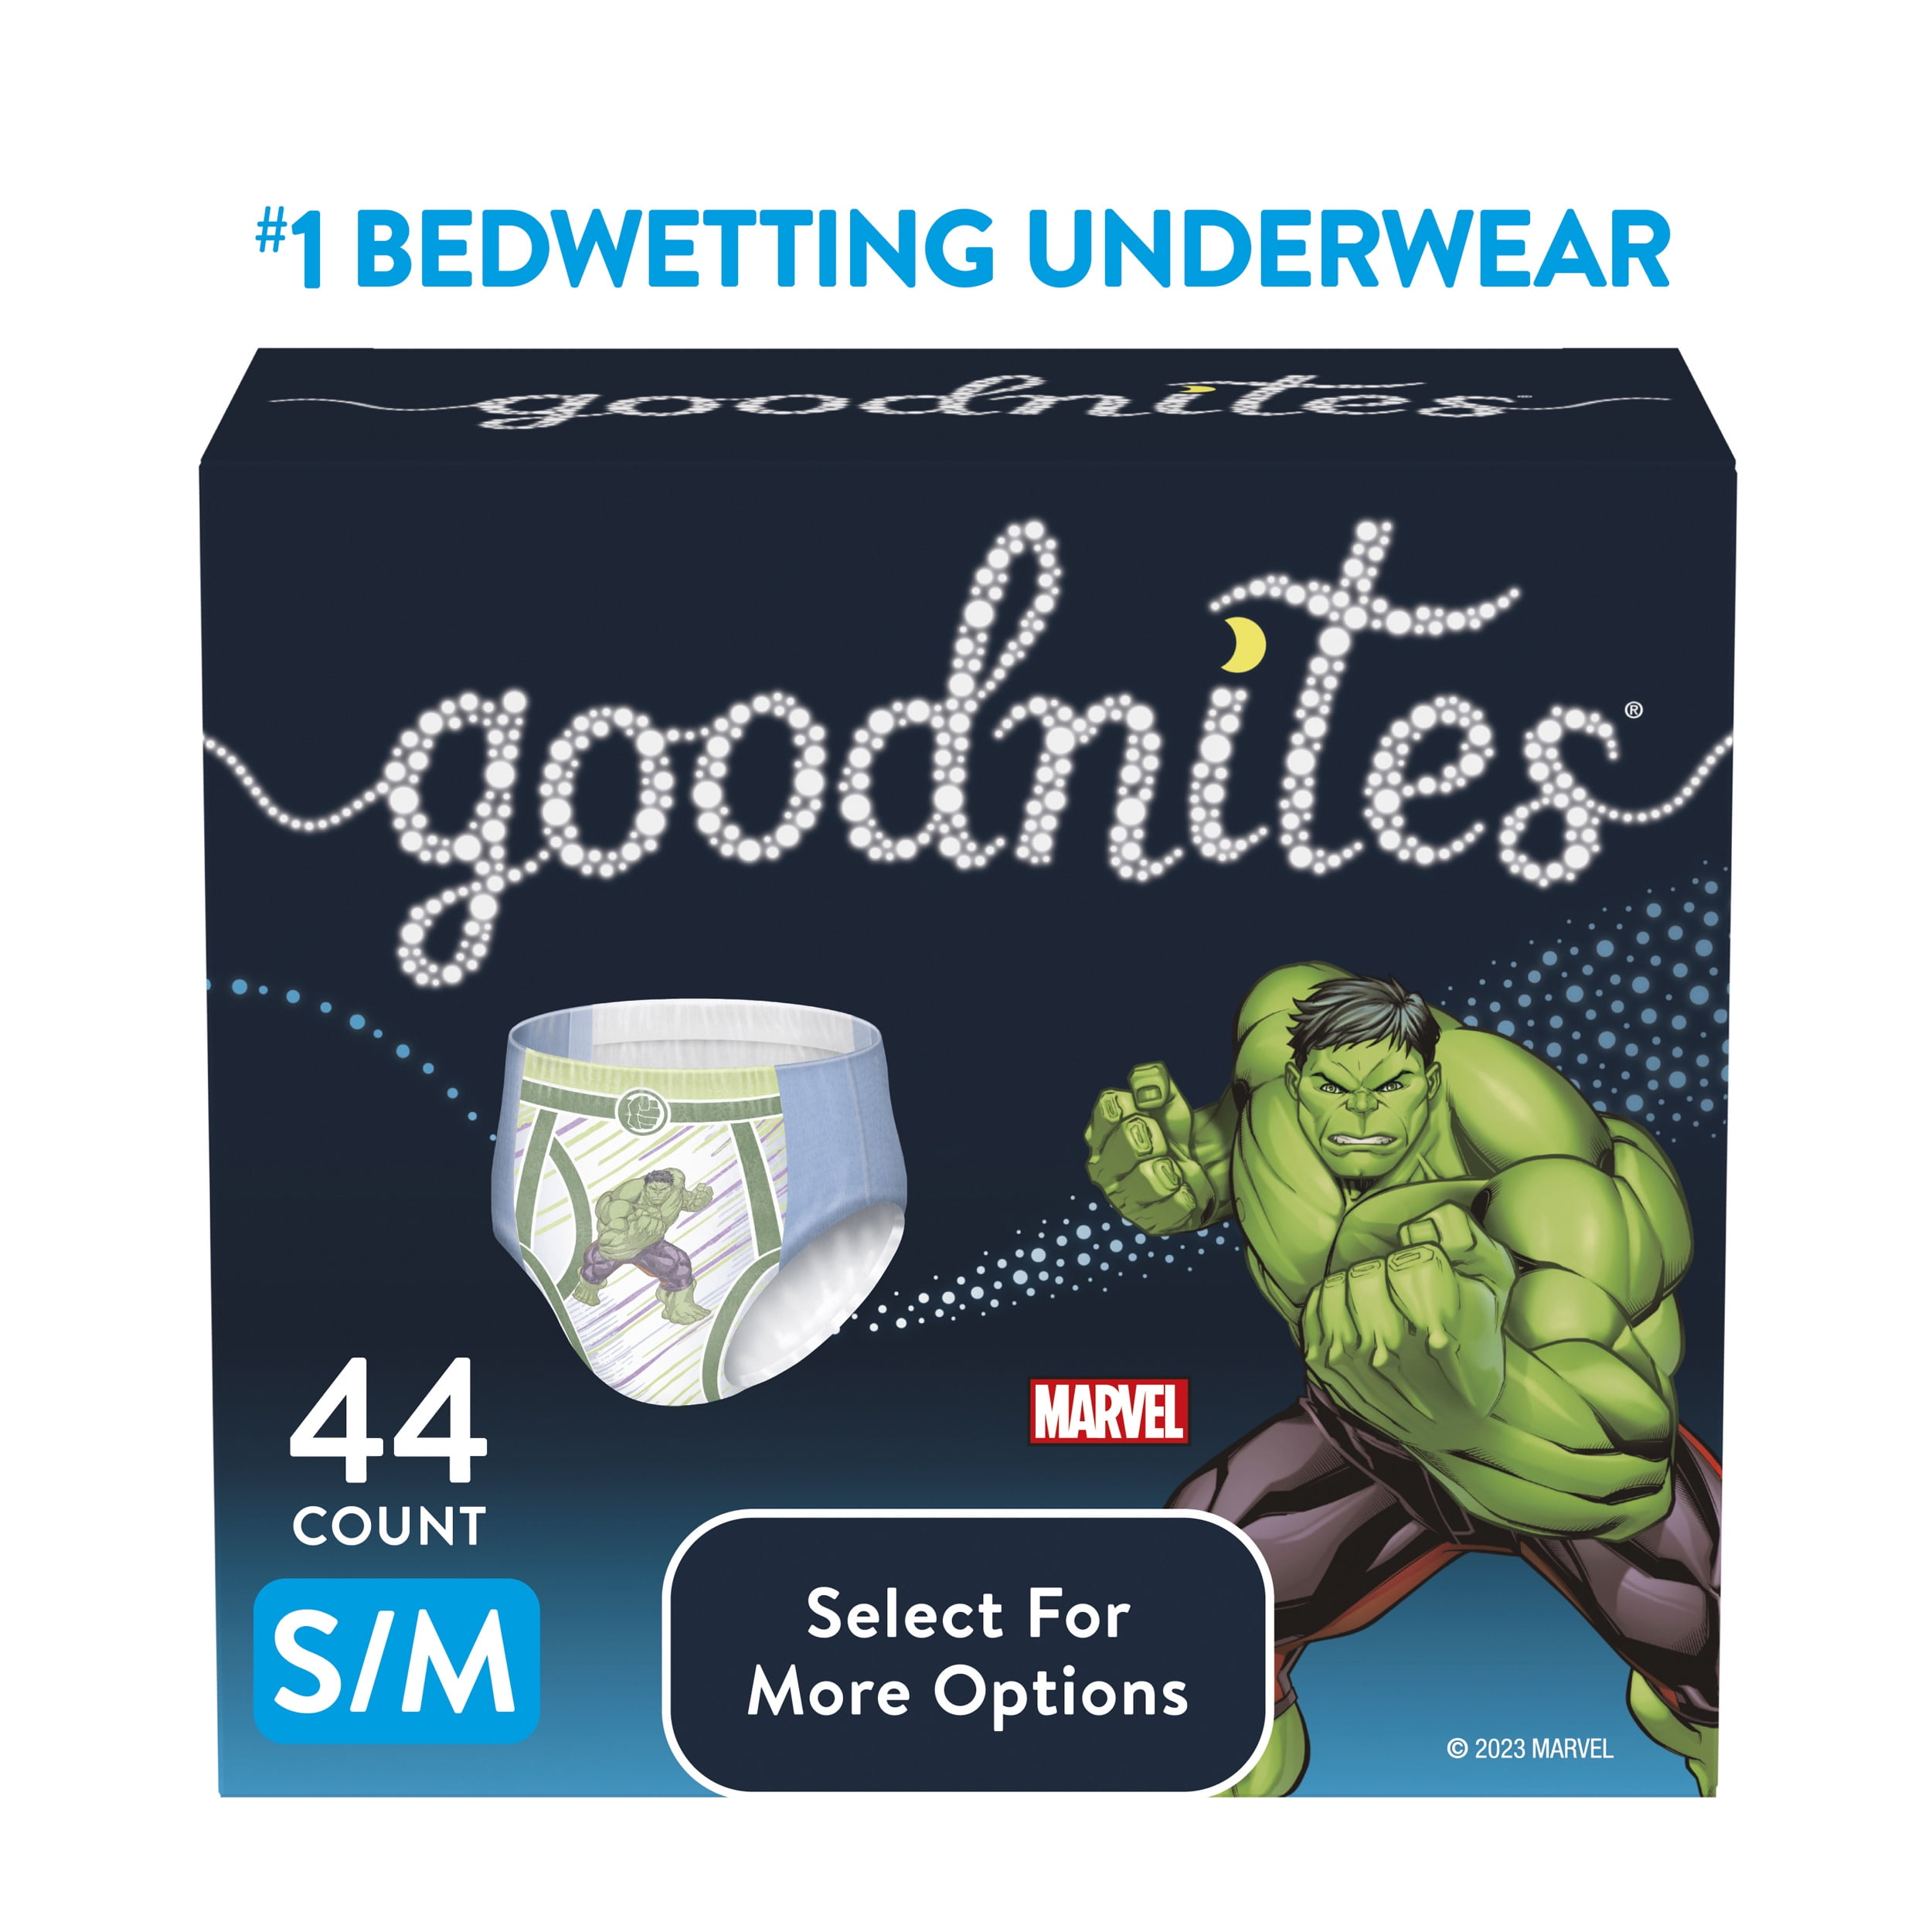  Goodnites Boys' Nighttime Bedwetting Underwear, Size S